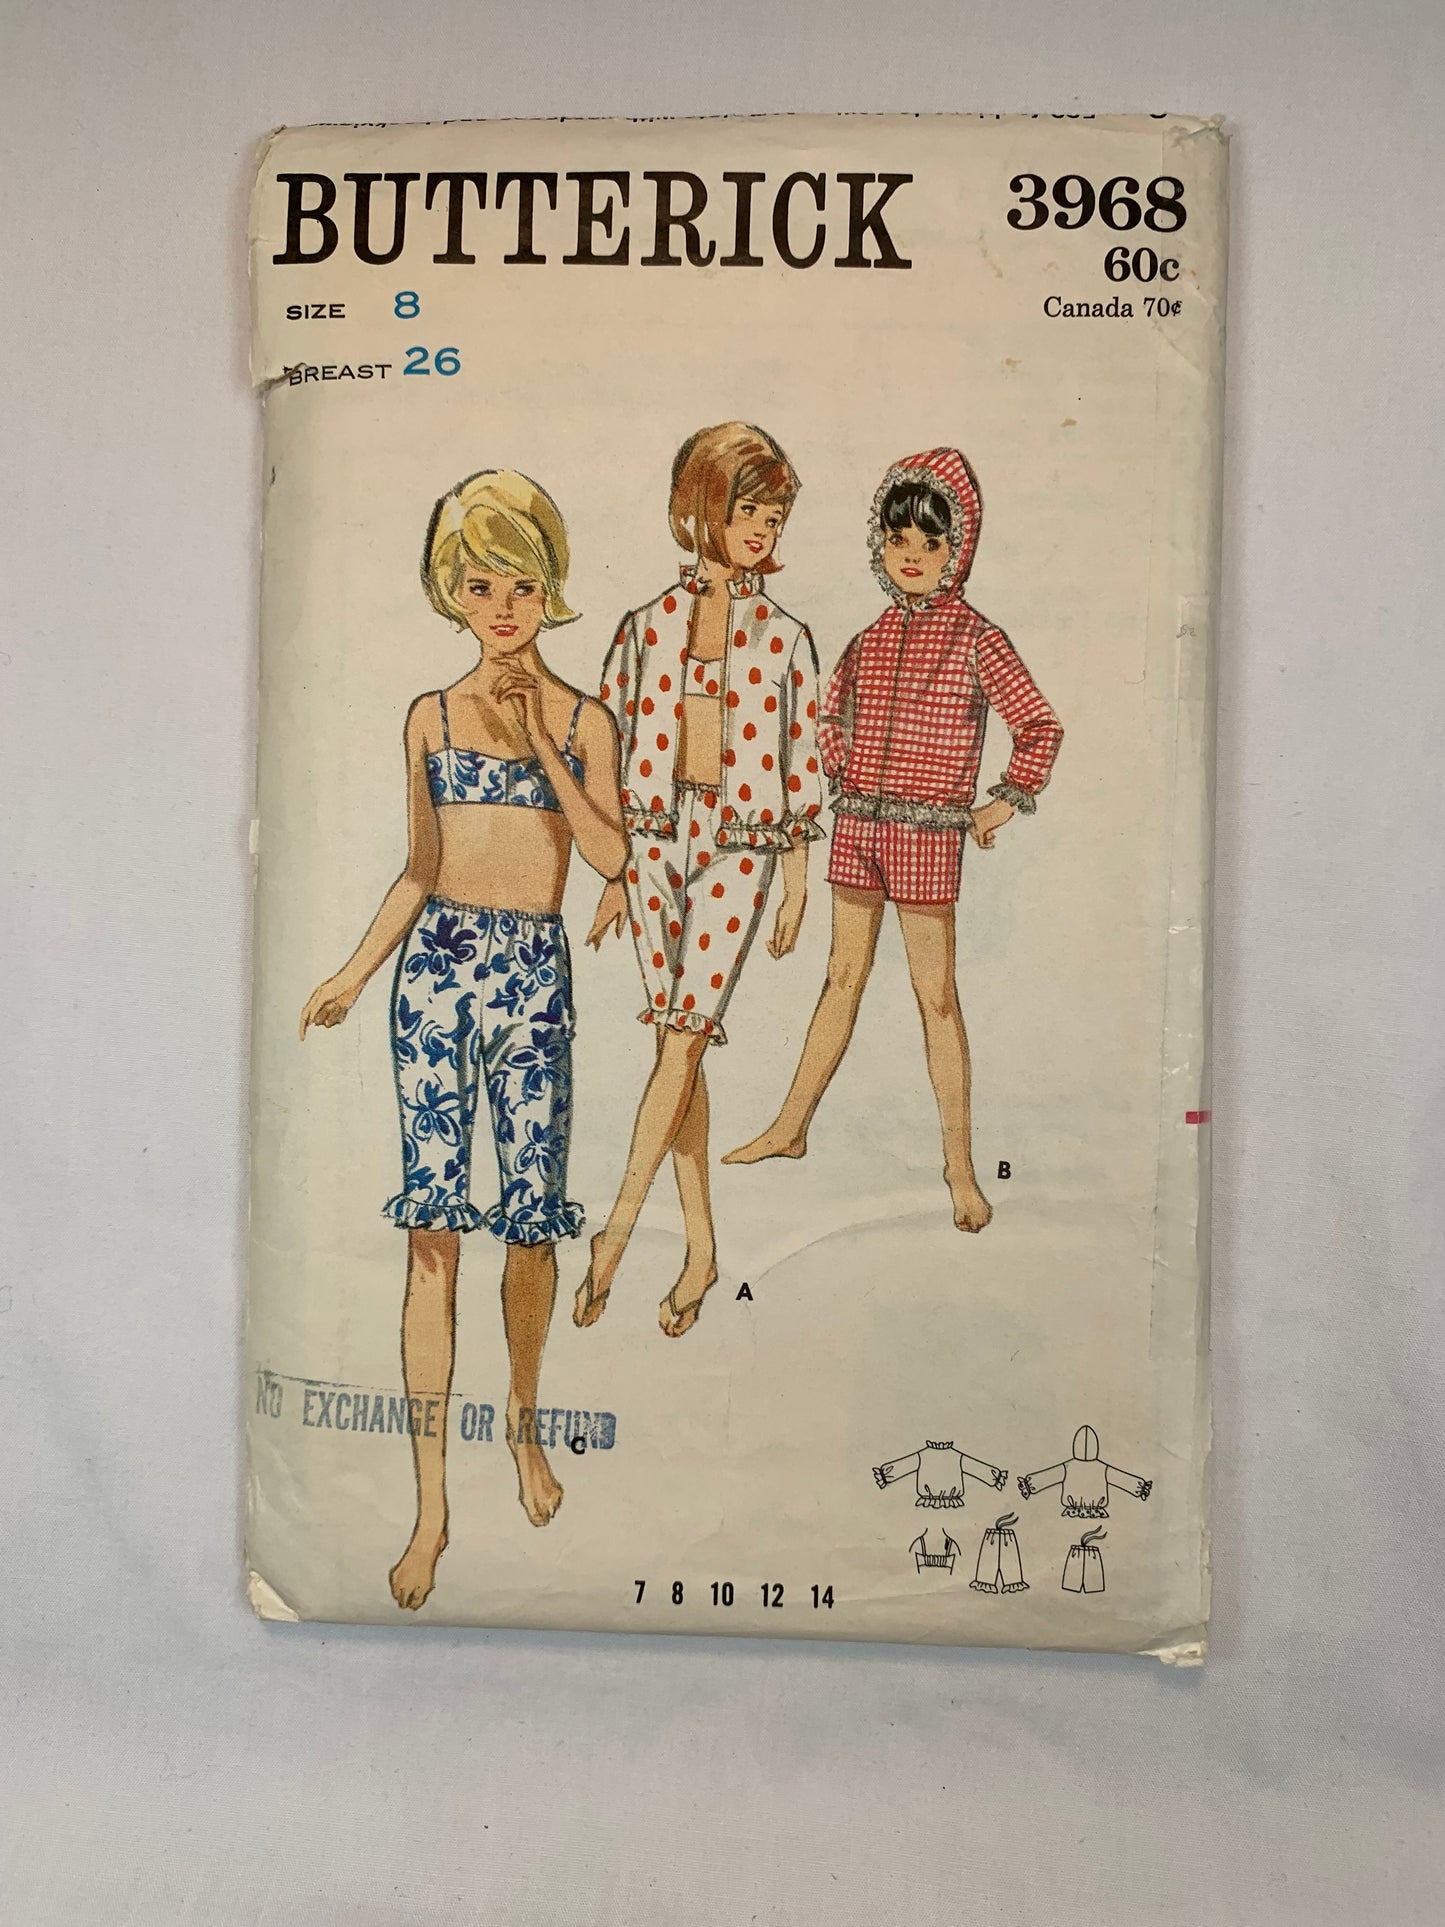 PATTERN Easy Sew Vintage Women Bikini Lace Trim Bra Panties Beach